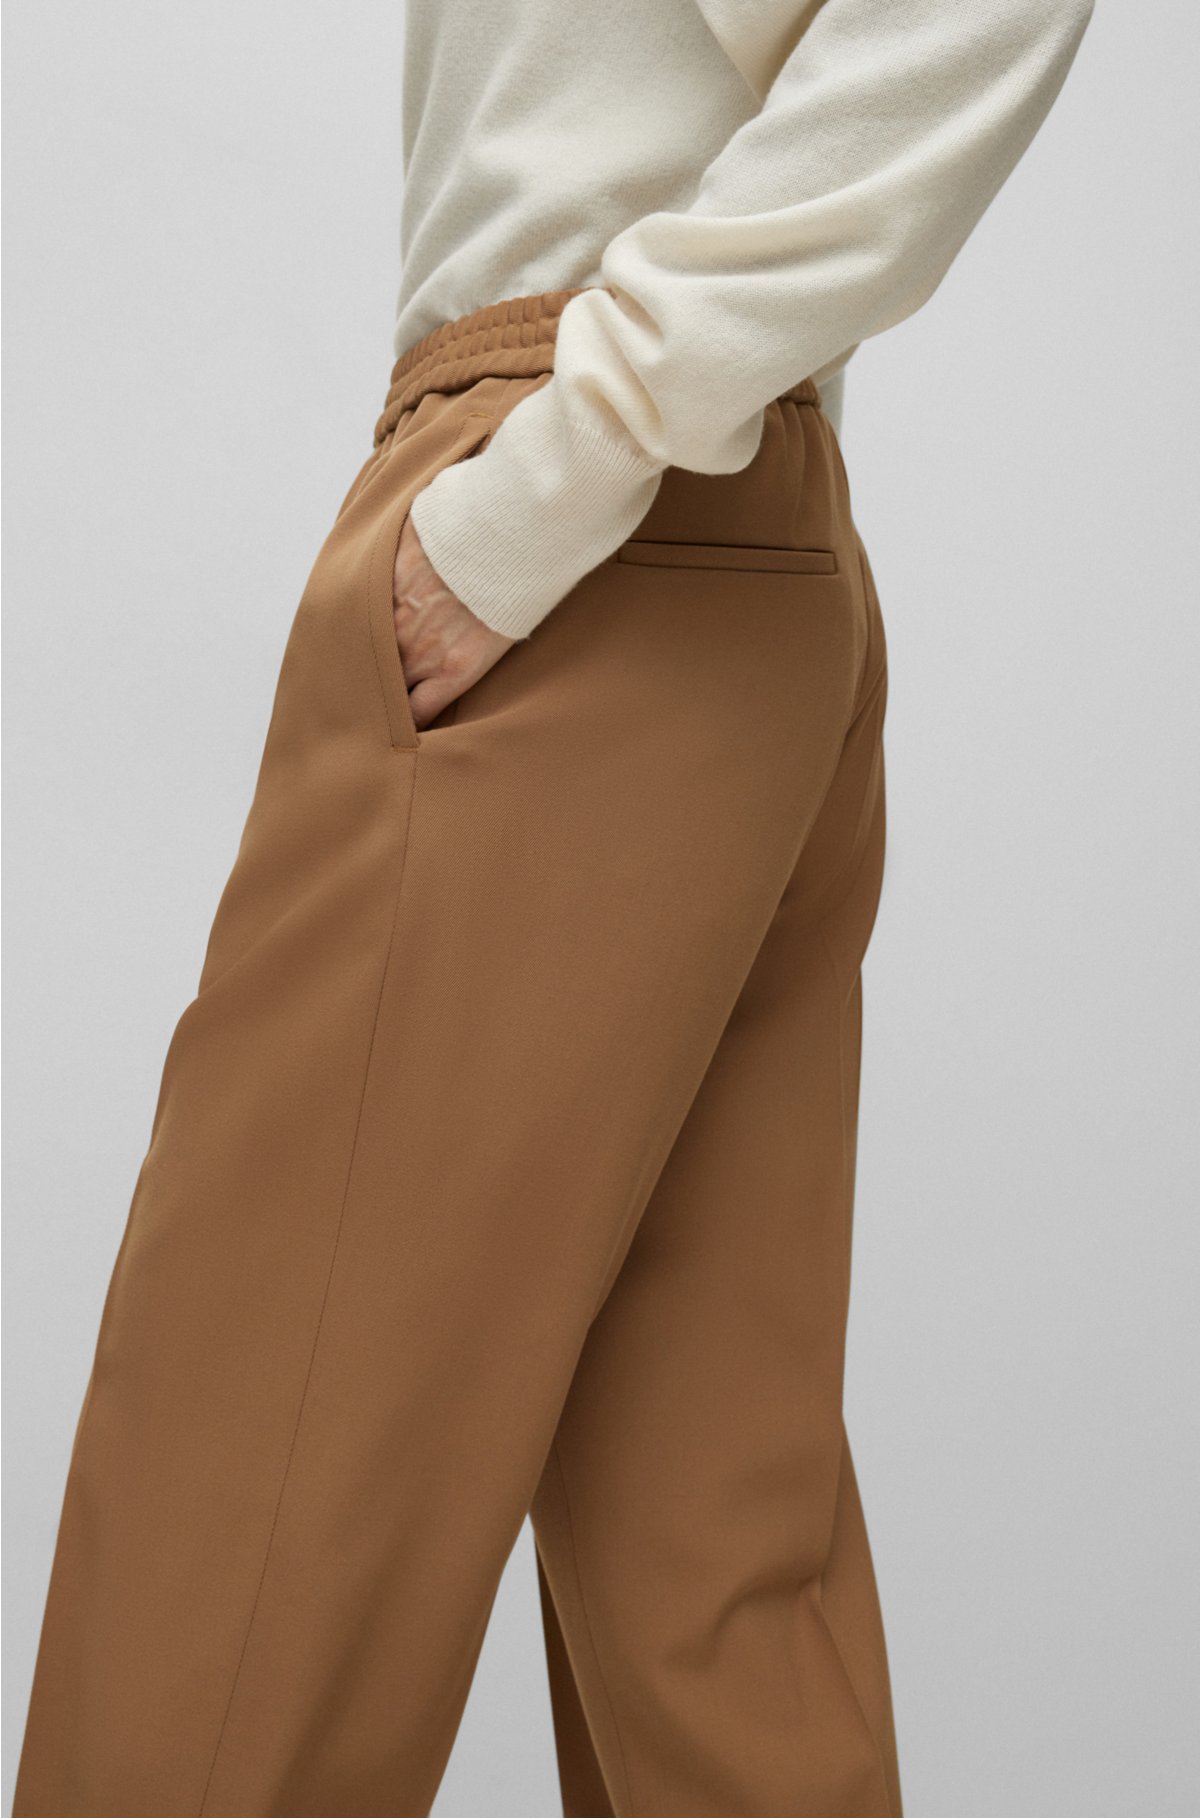 Hugo Boss Women's Tiluna11 Brown Wool Dress Pants